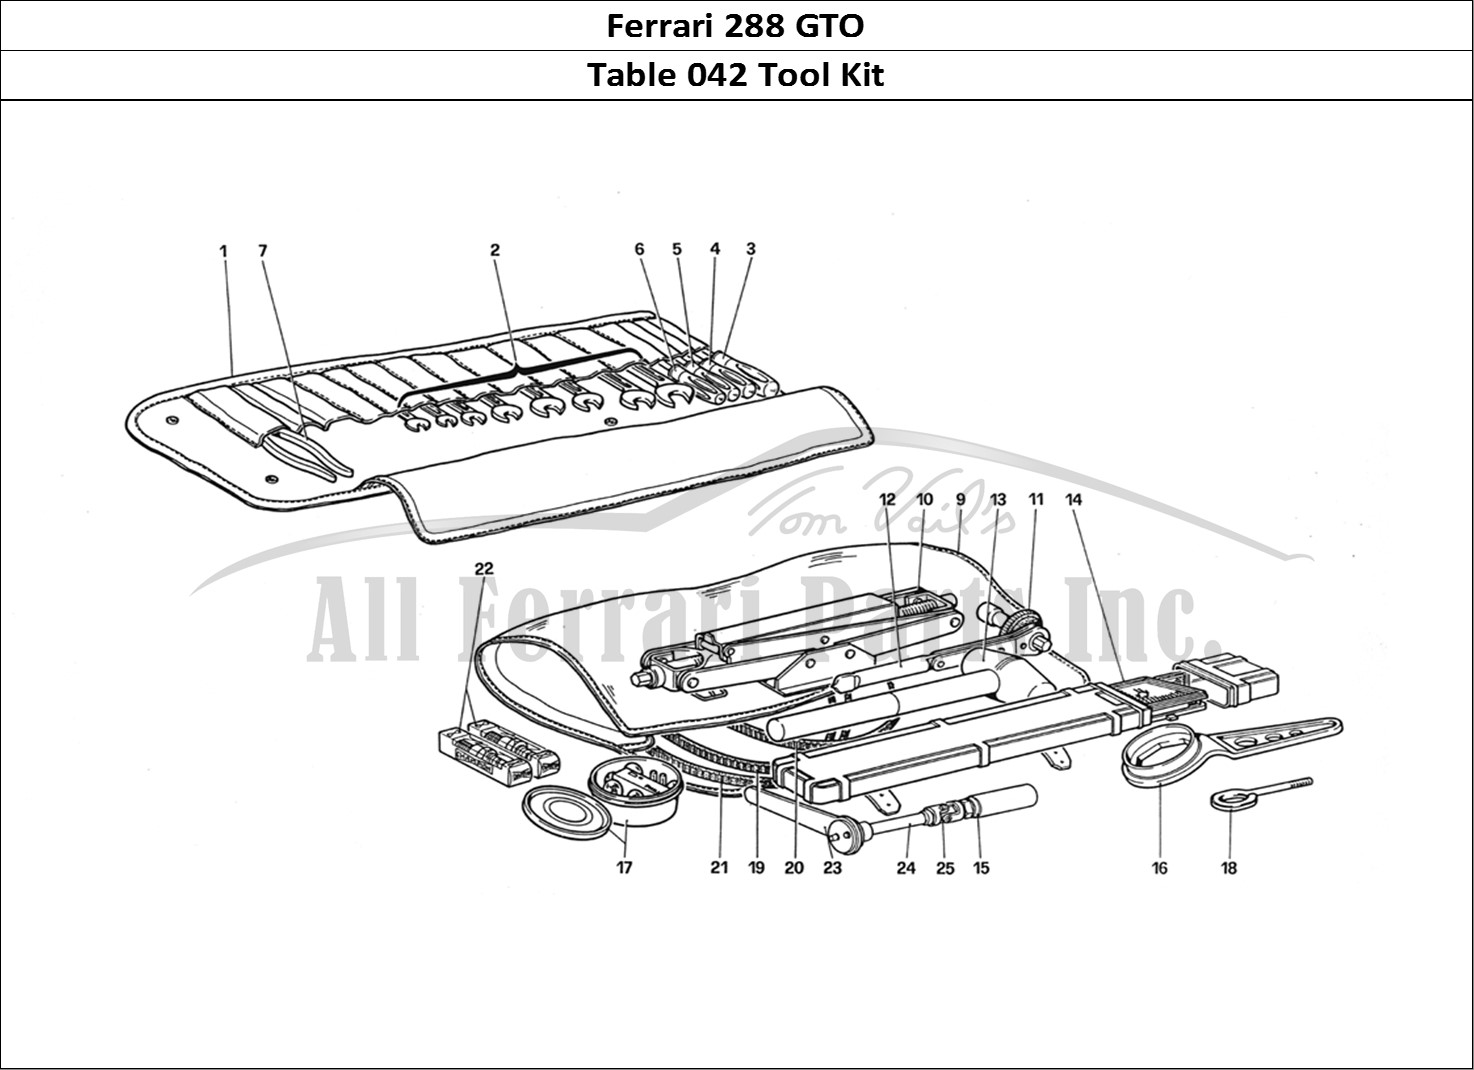 Ferrari Parts Ferrari 288 GTO Page 042 Toolkit